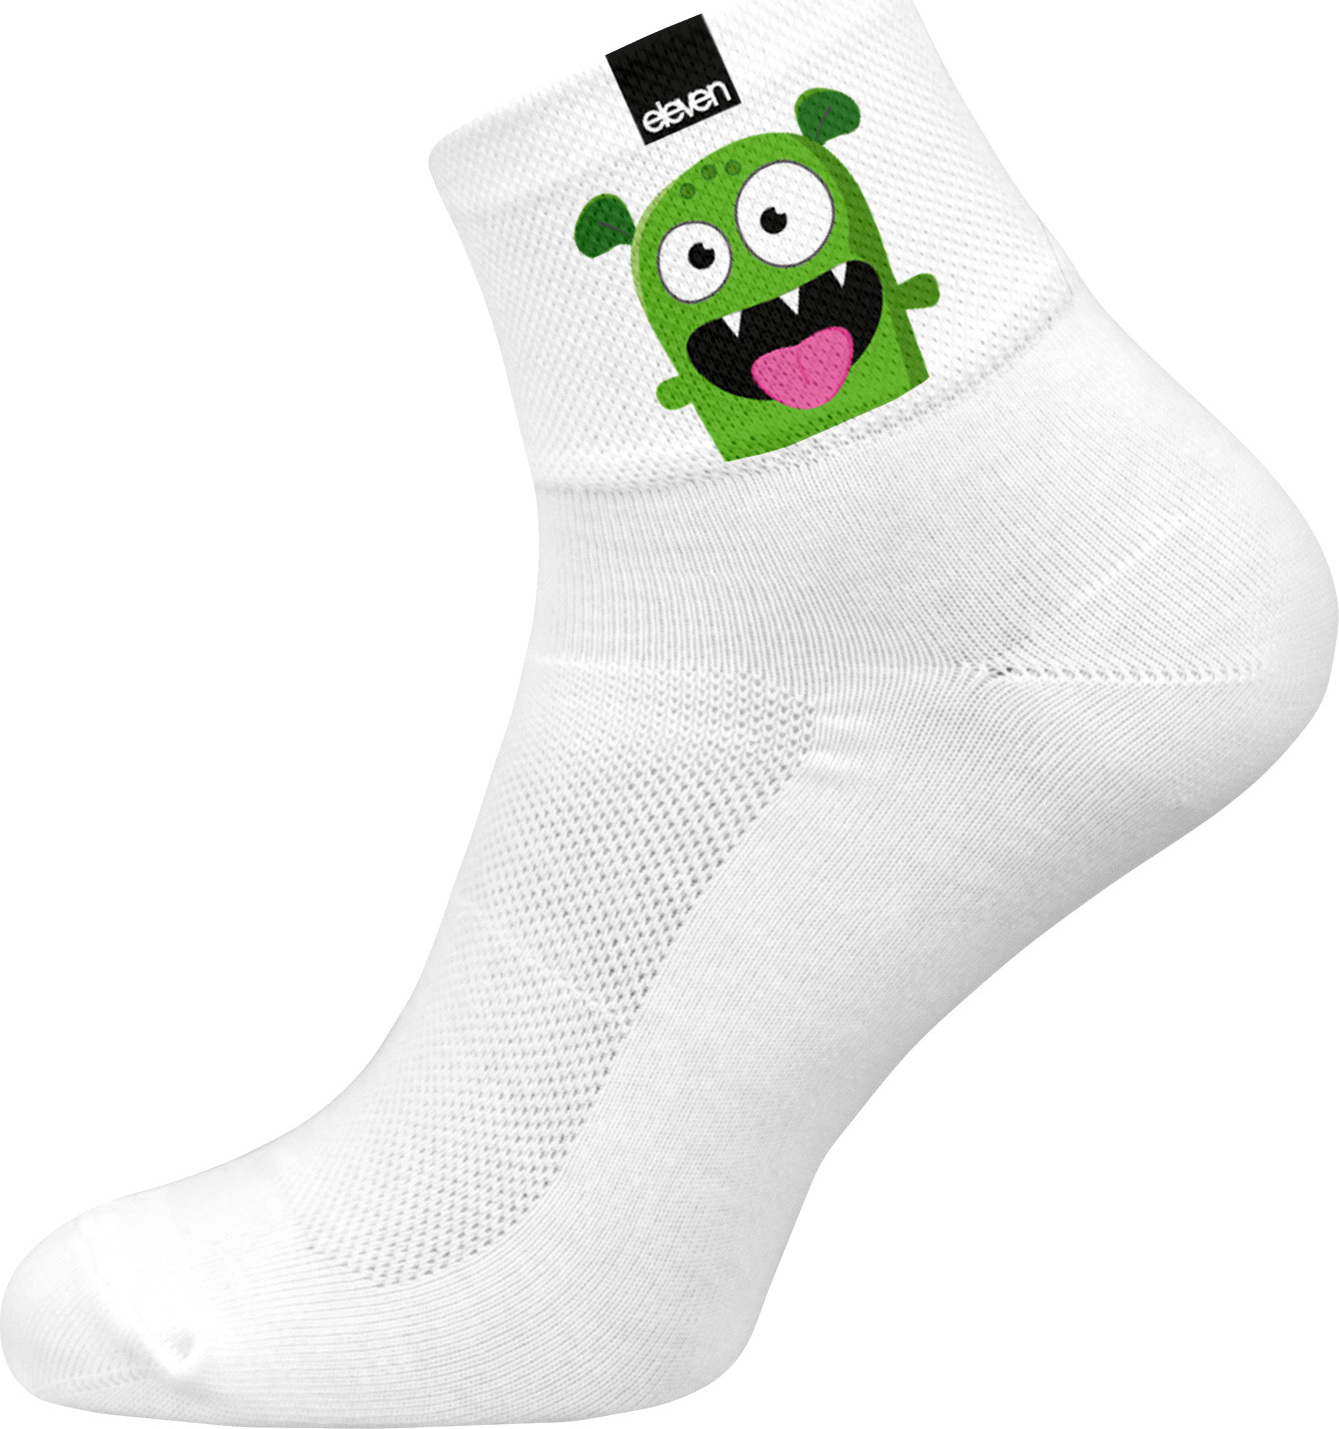 Ponožky ELEVEN Huba Monster Greenie Velikost: M (39-41)